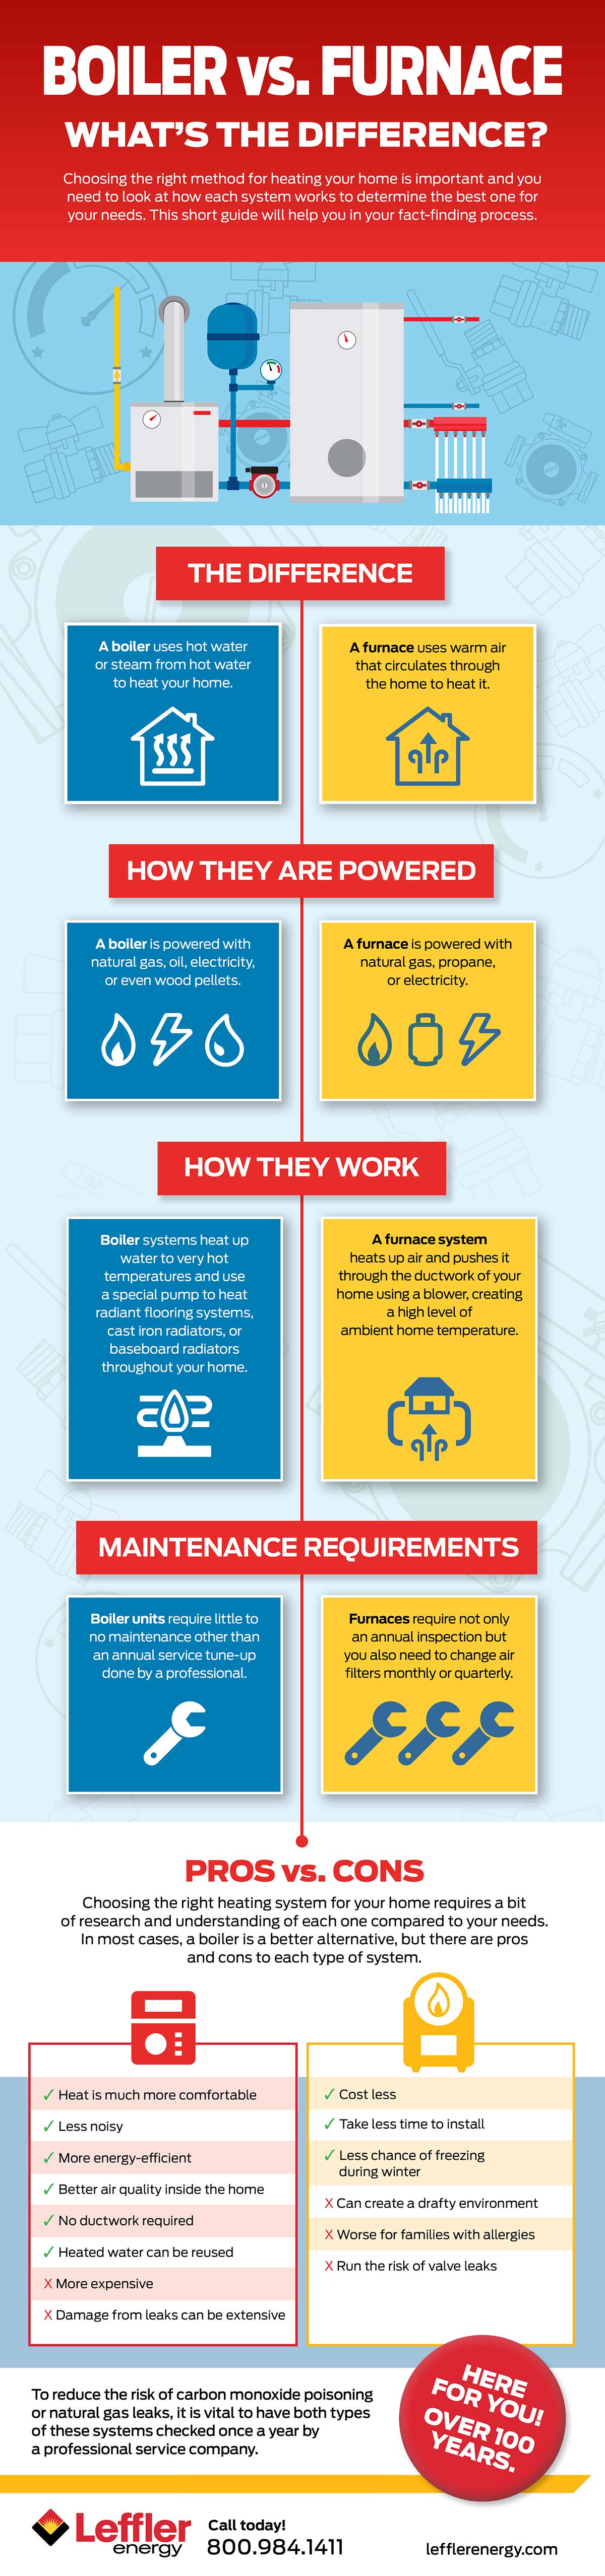 Boilers versus Furnaces infographic